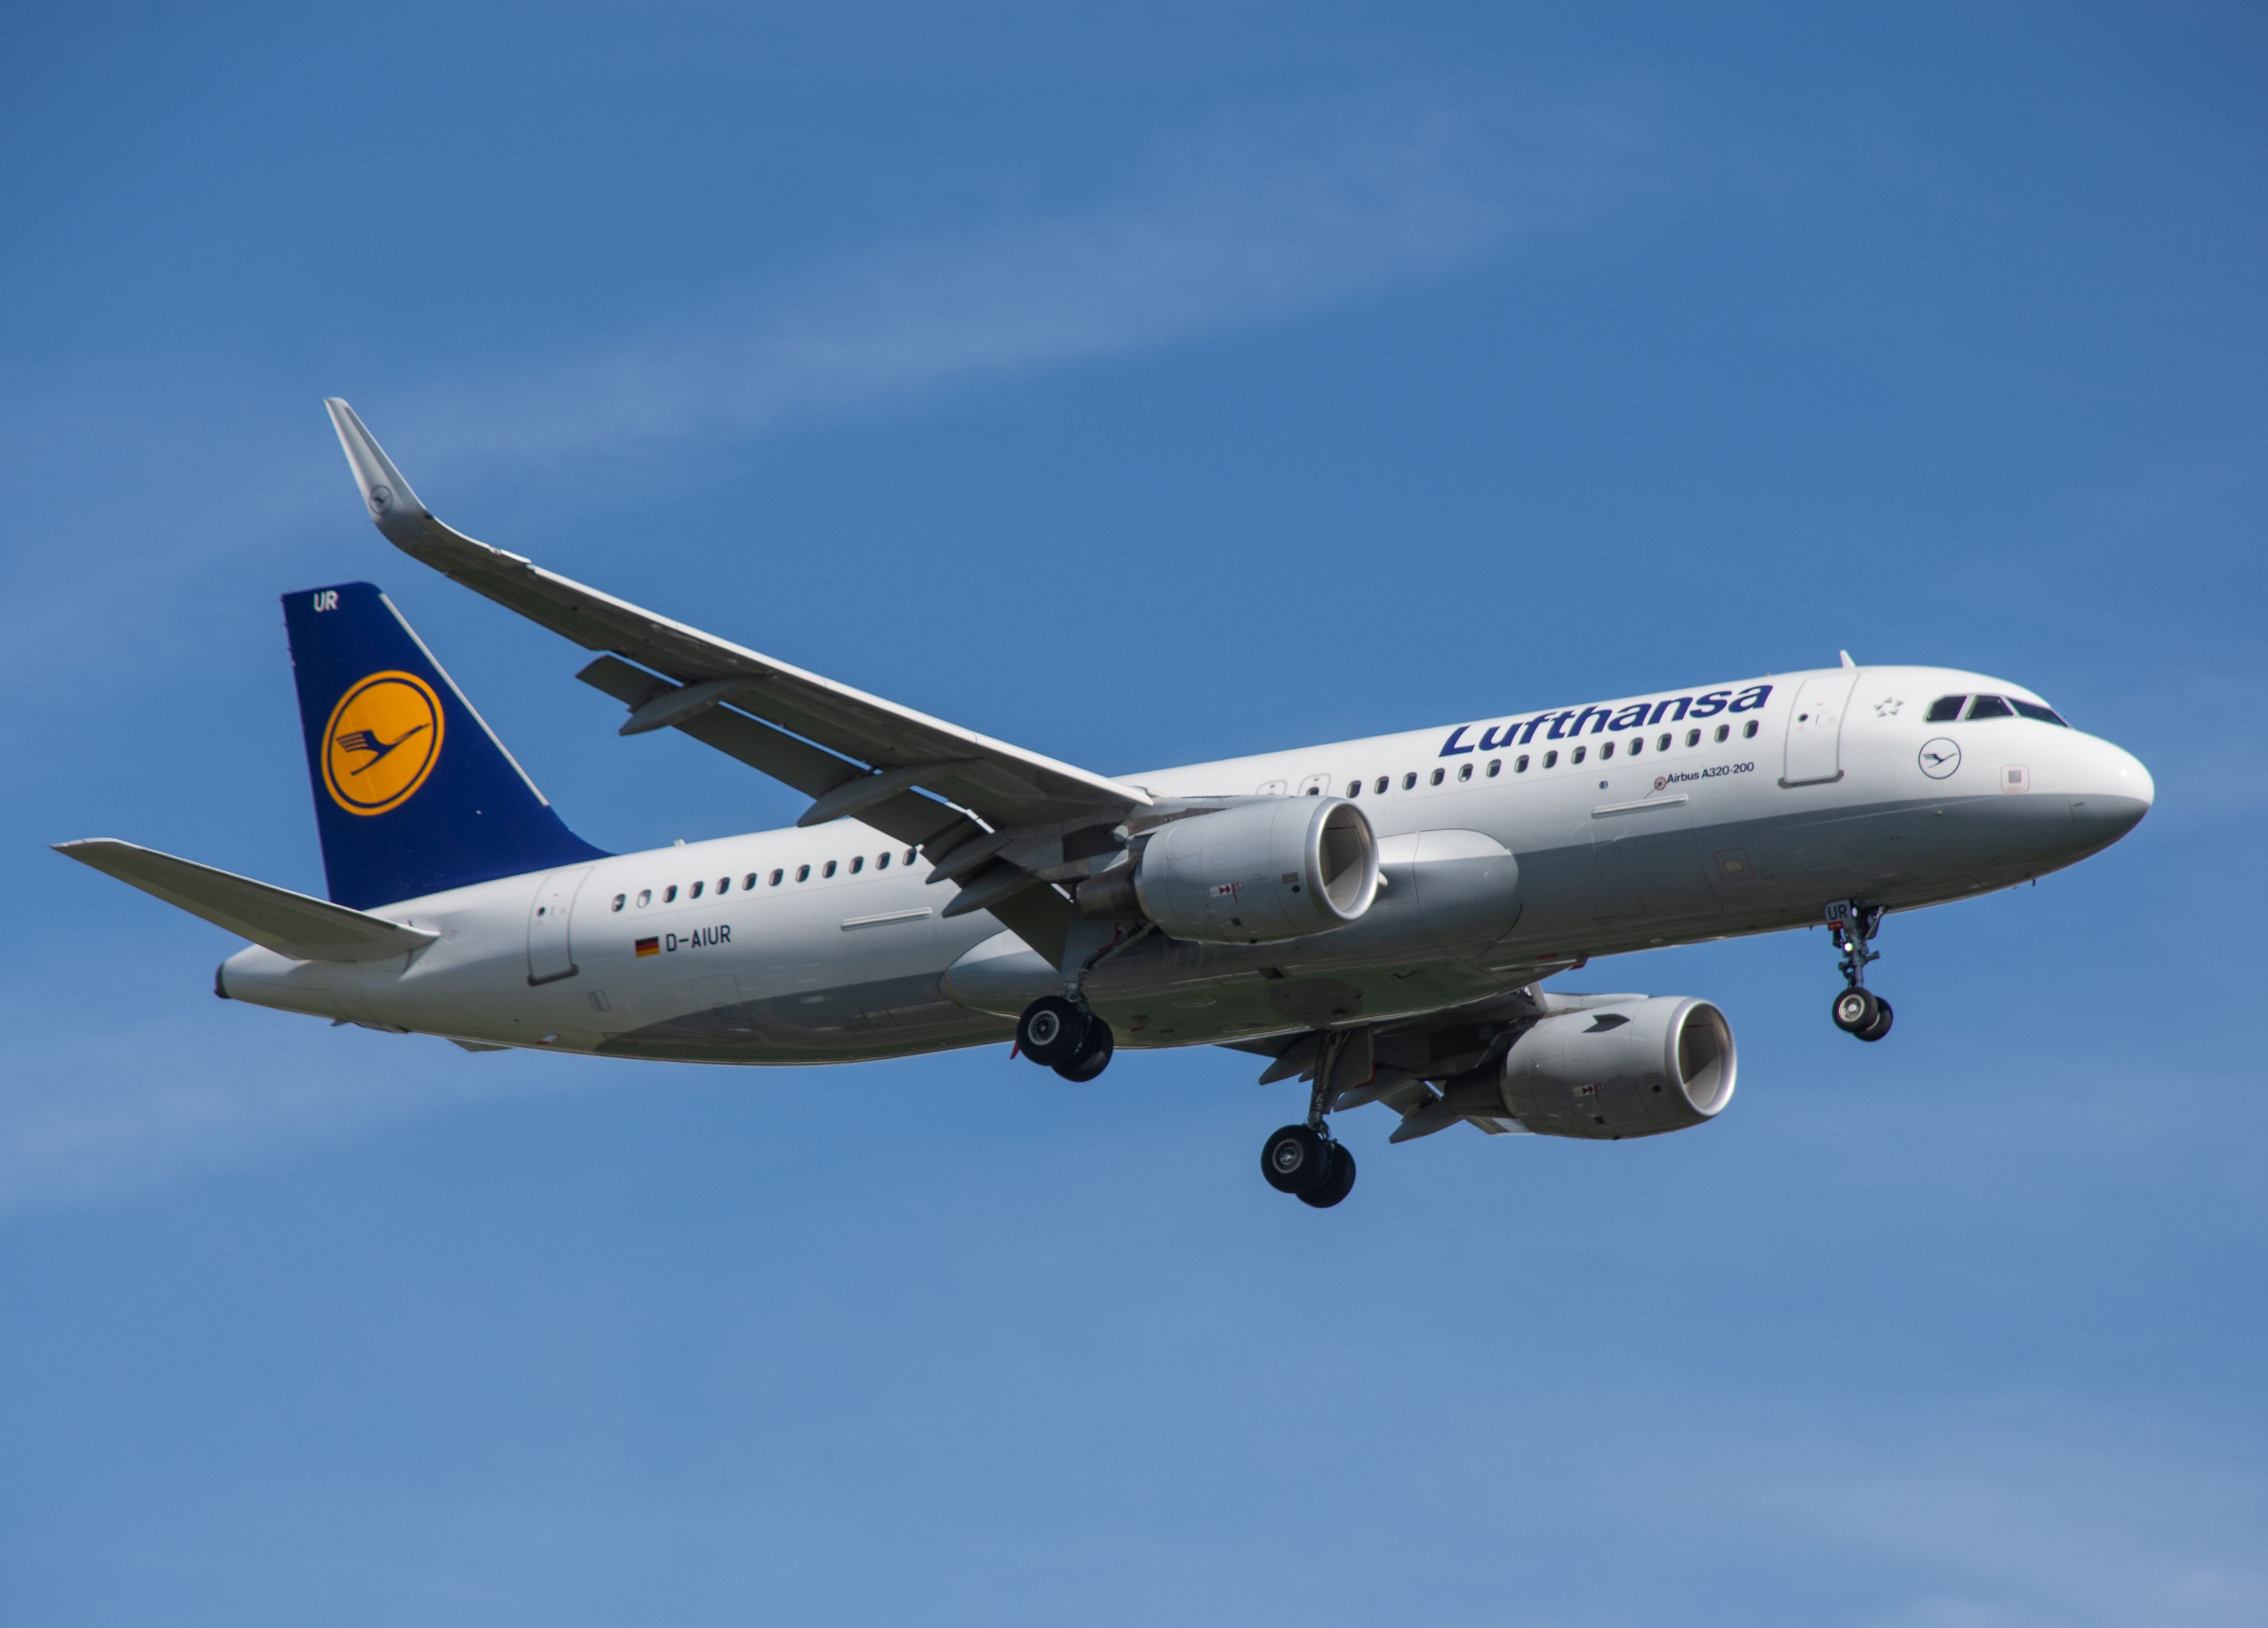 D-AIUR/DAIUR Discover Airlines Airbus A320 Airframe Information - AVSpotters.com